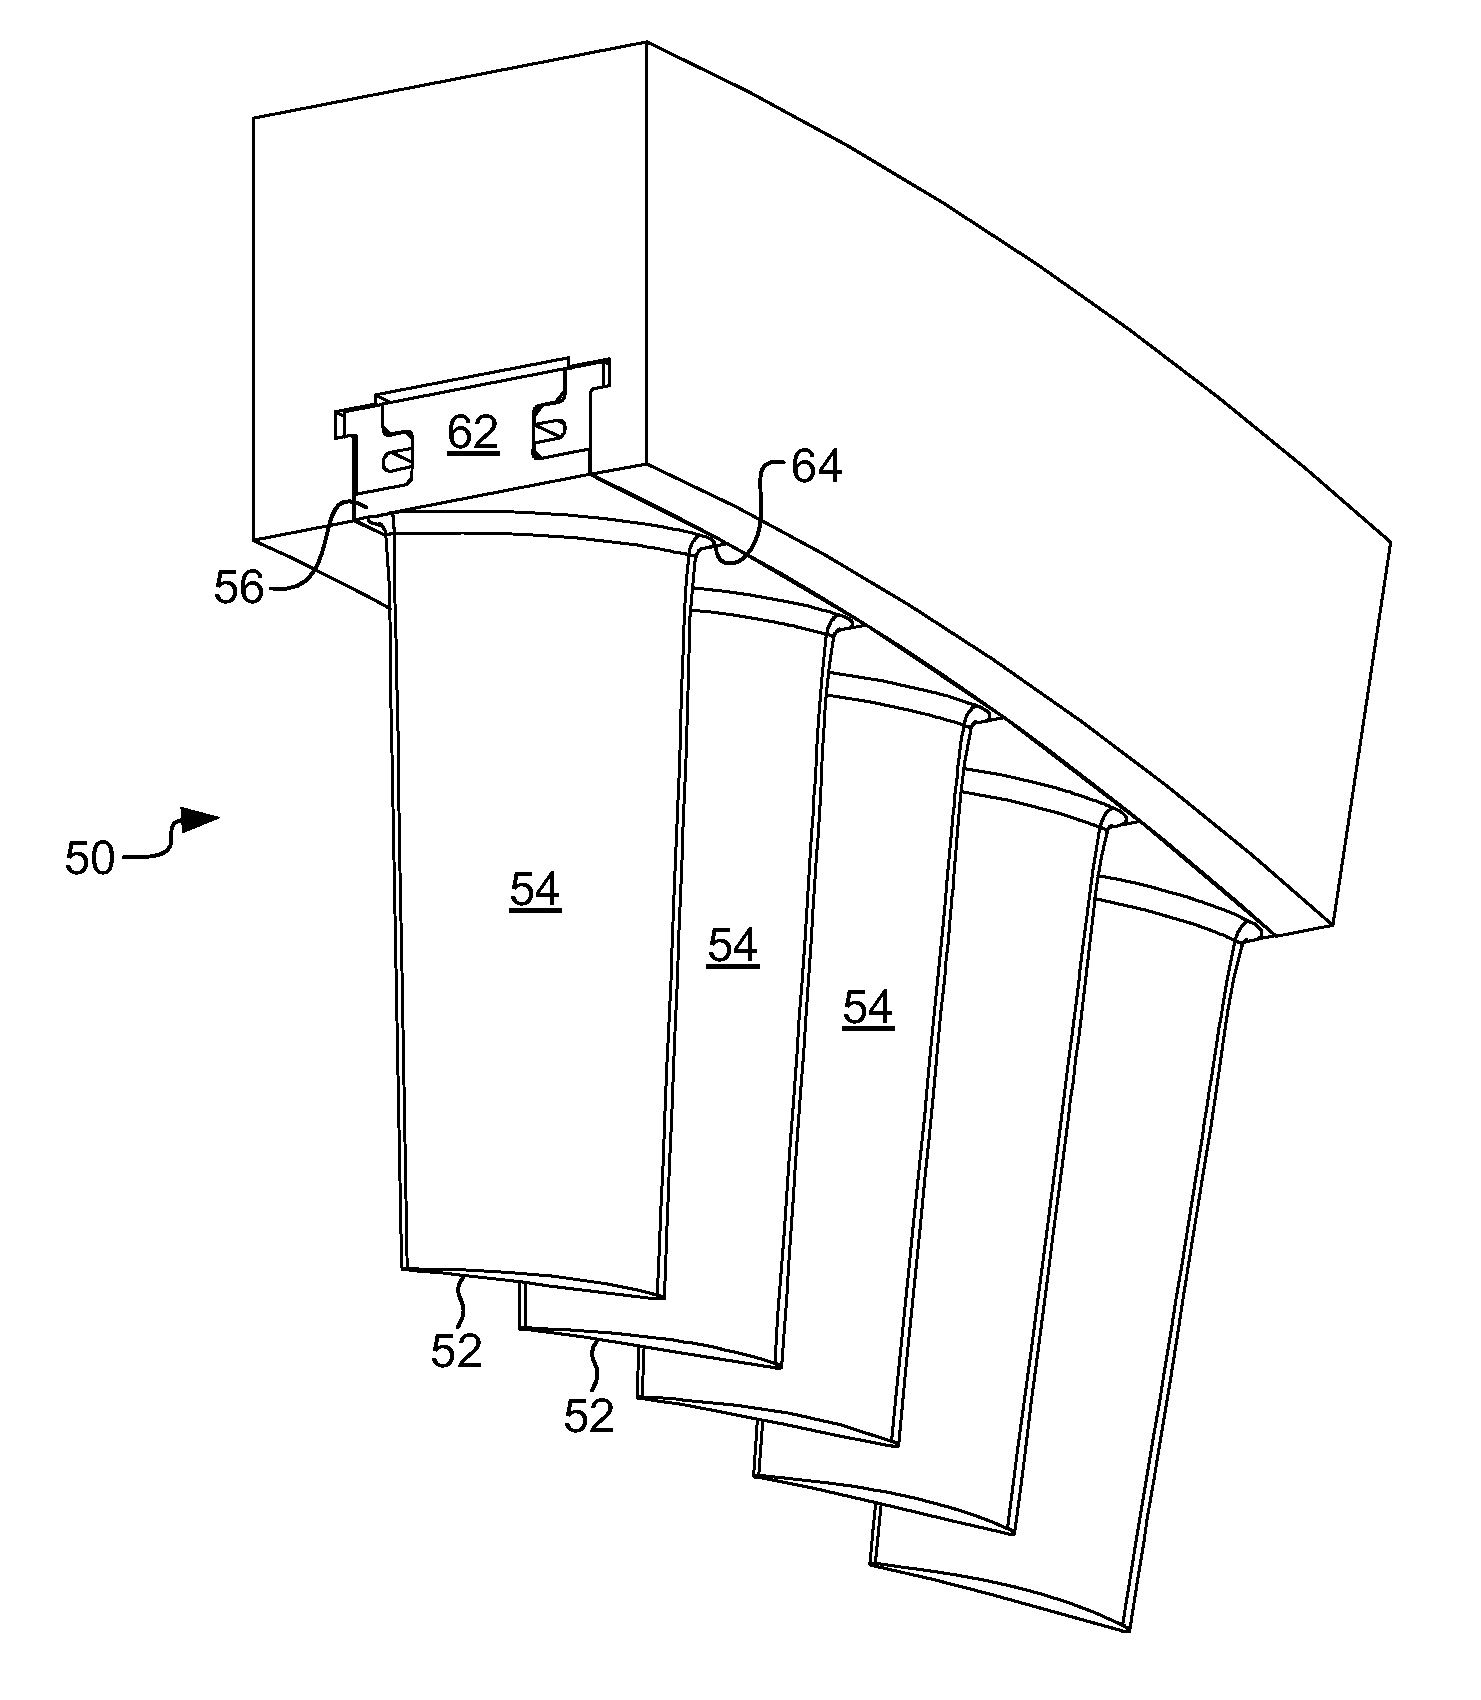 Hook ring segment for a compressor vane